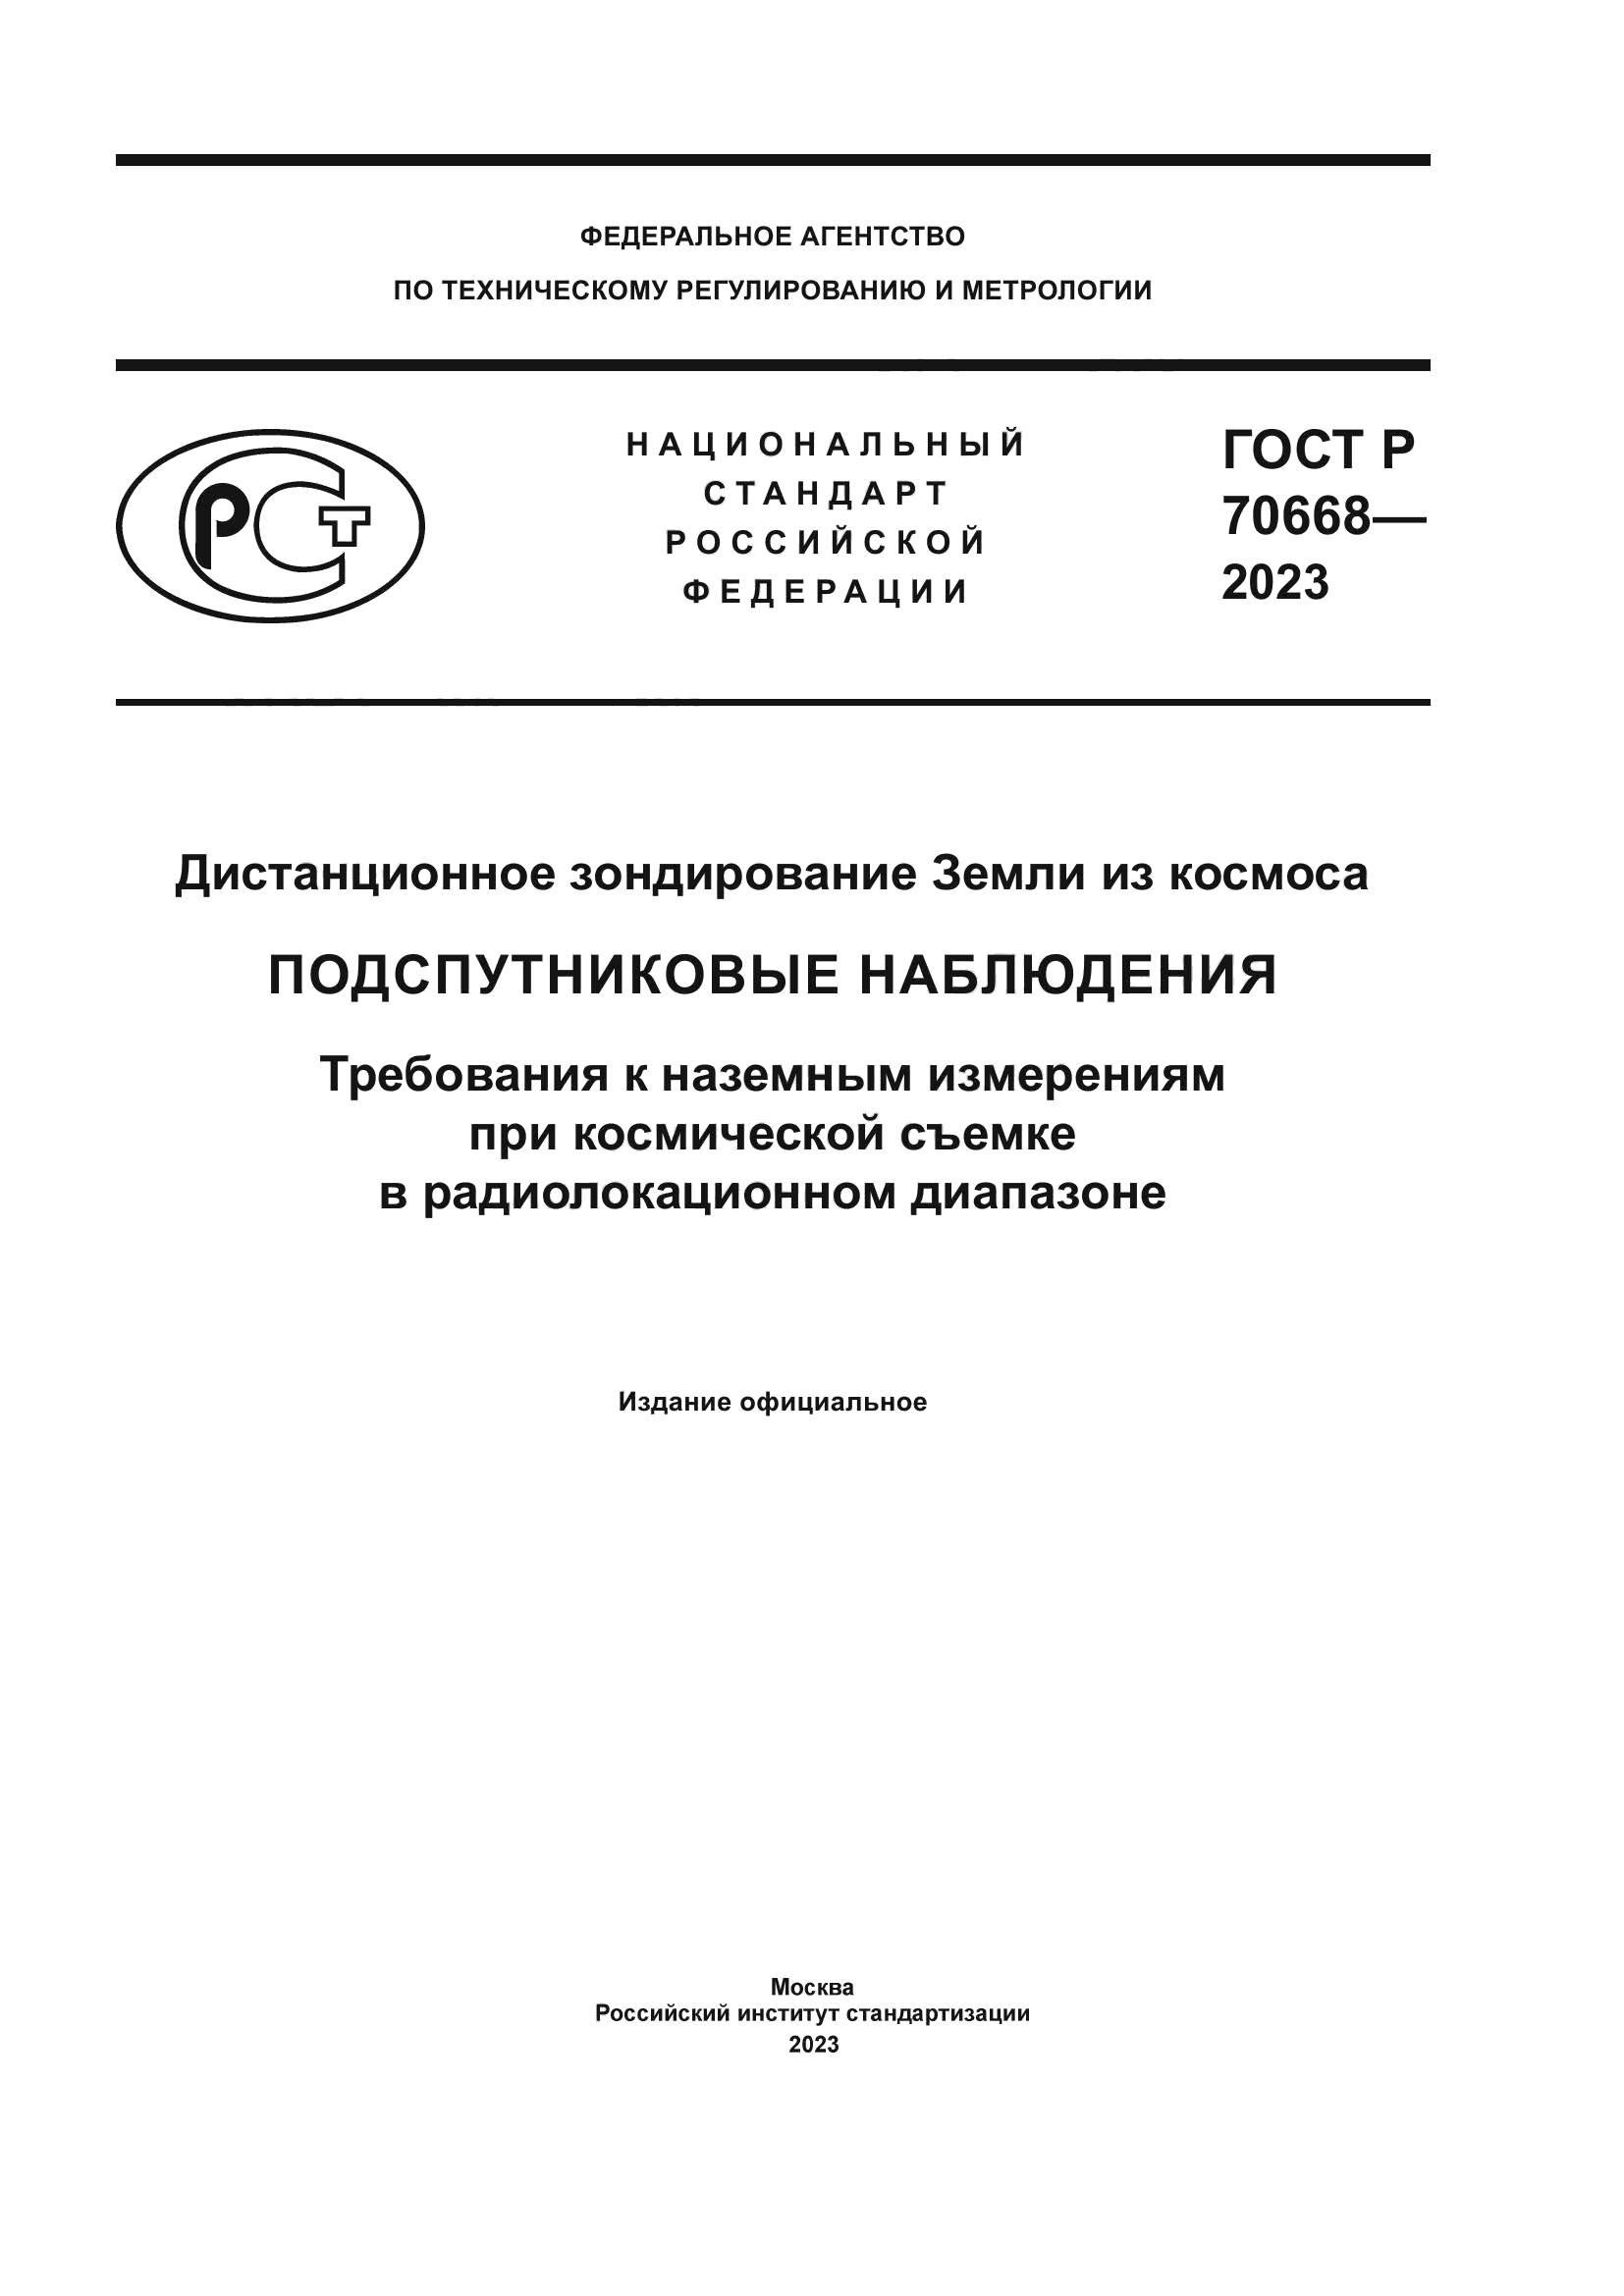 ГОСТ Р 70668-2023